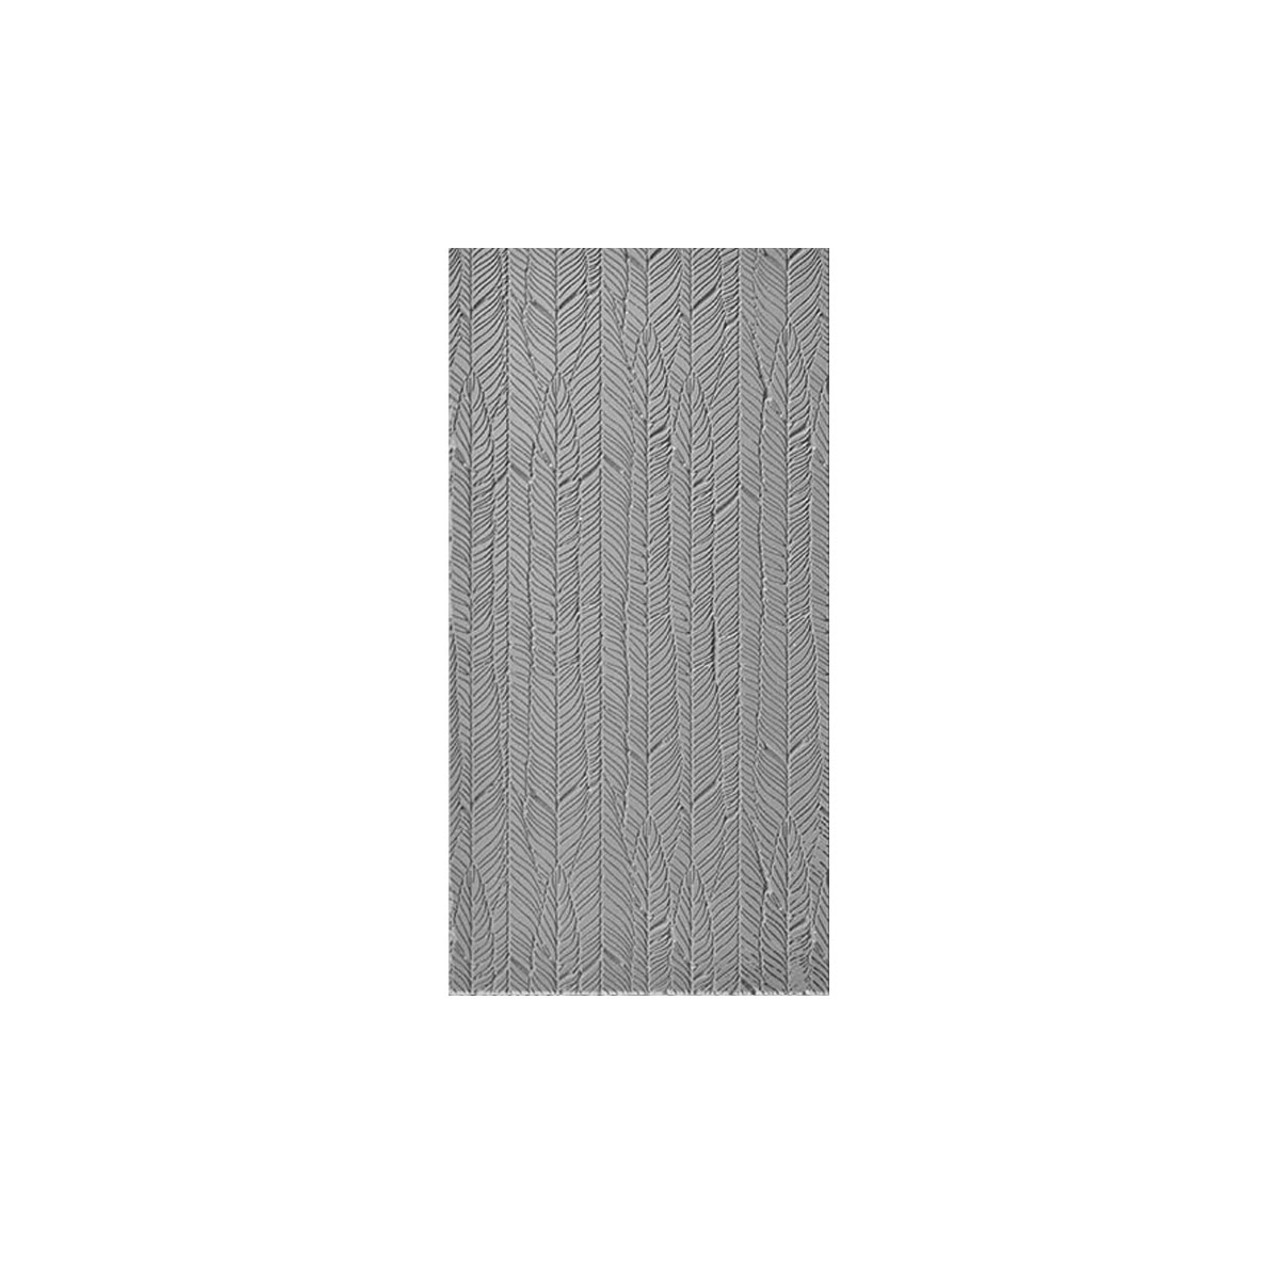 Texture Tile - Feathered Fineline